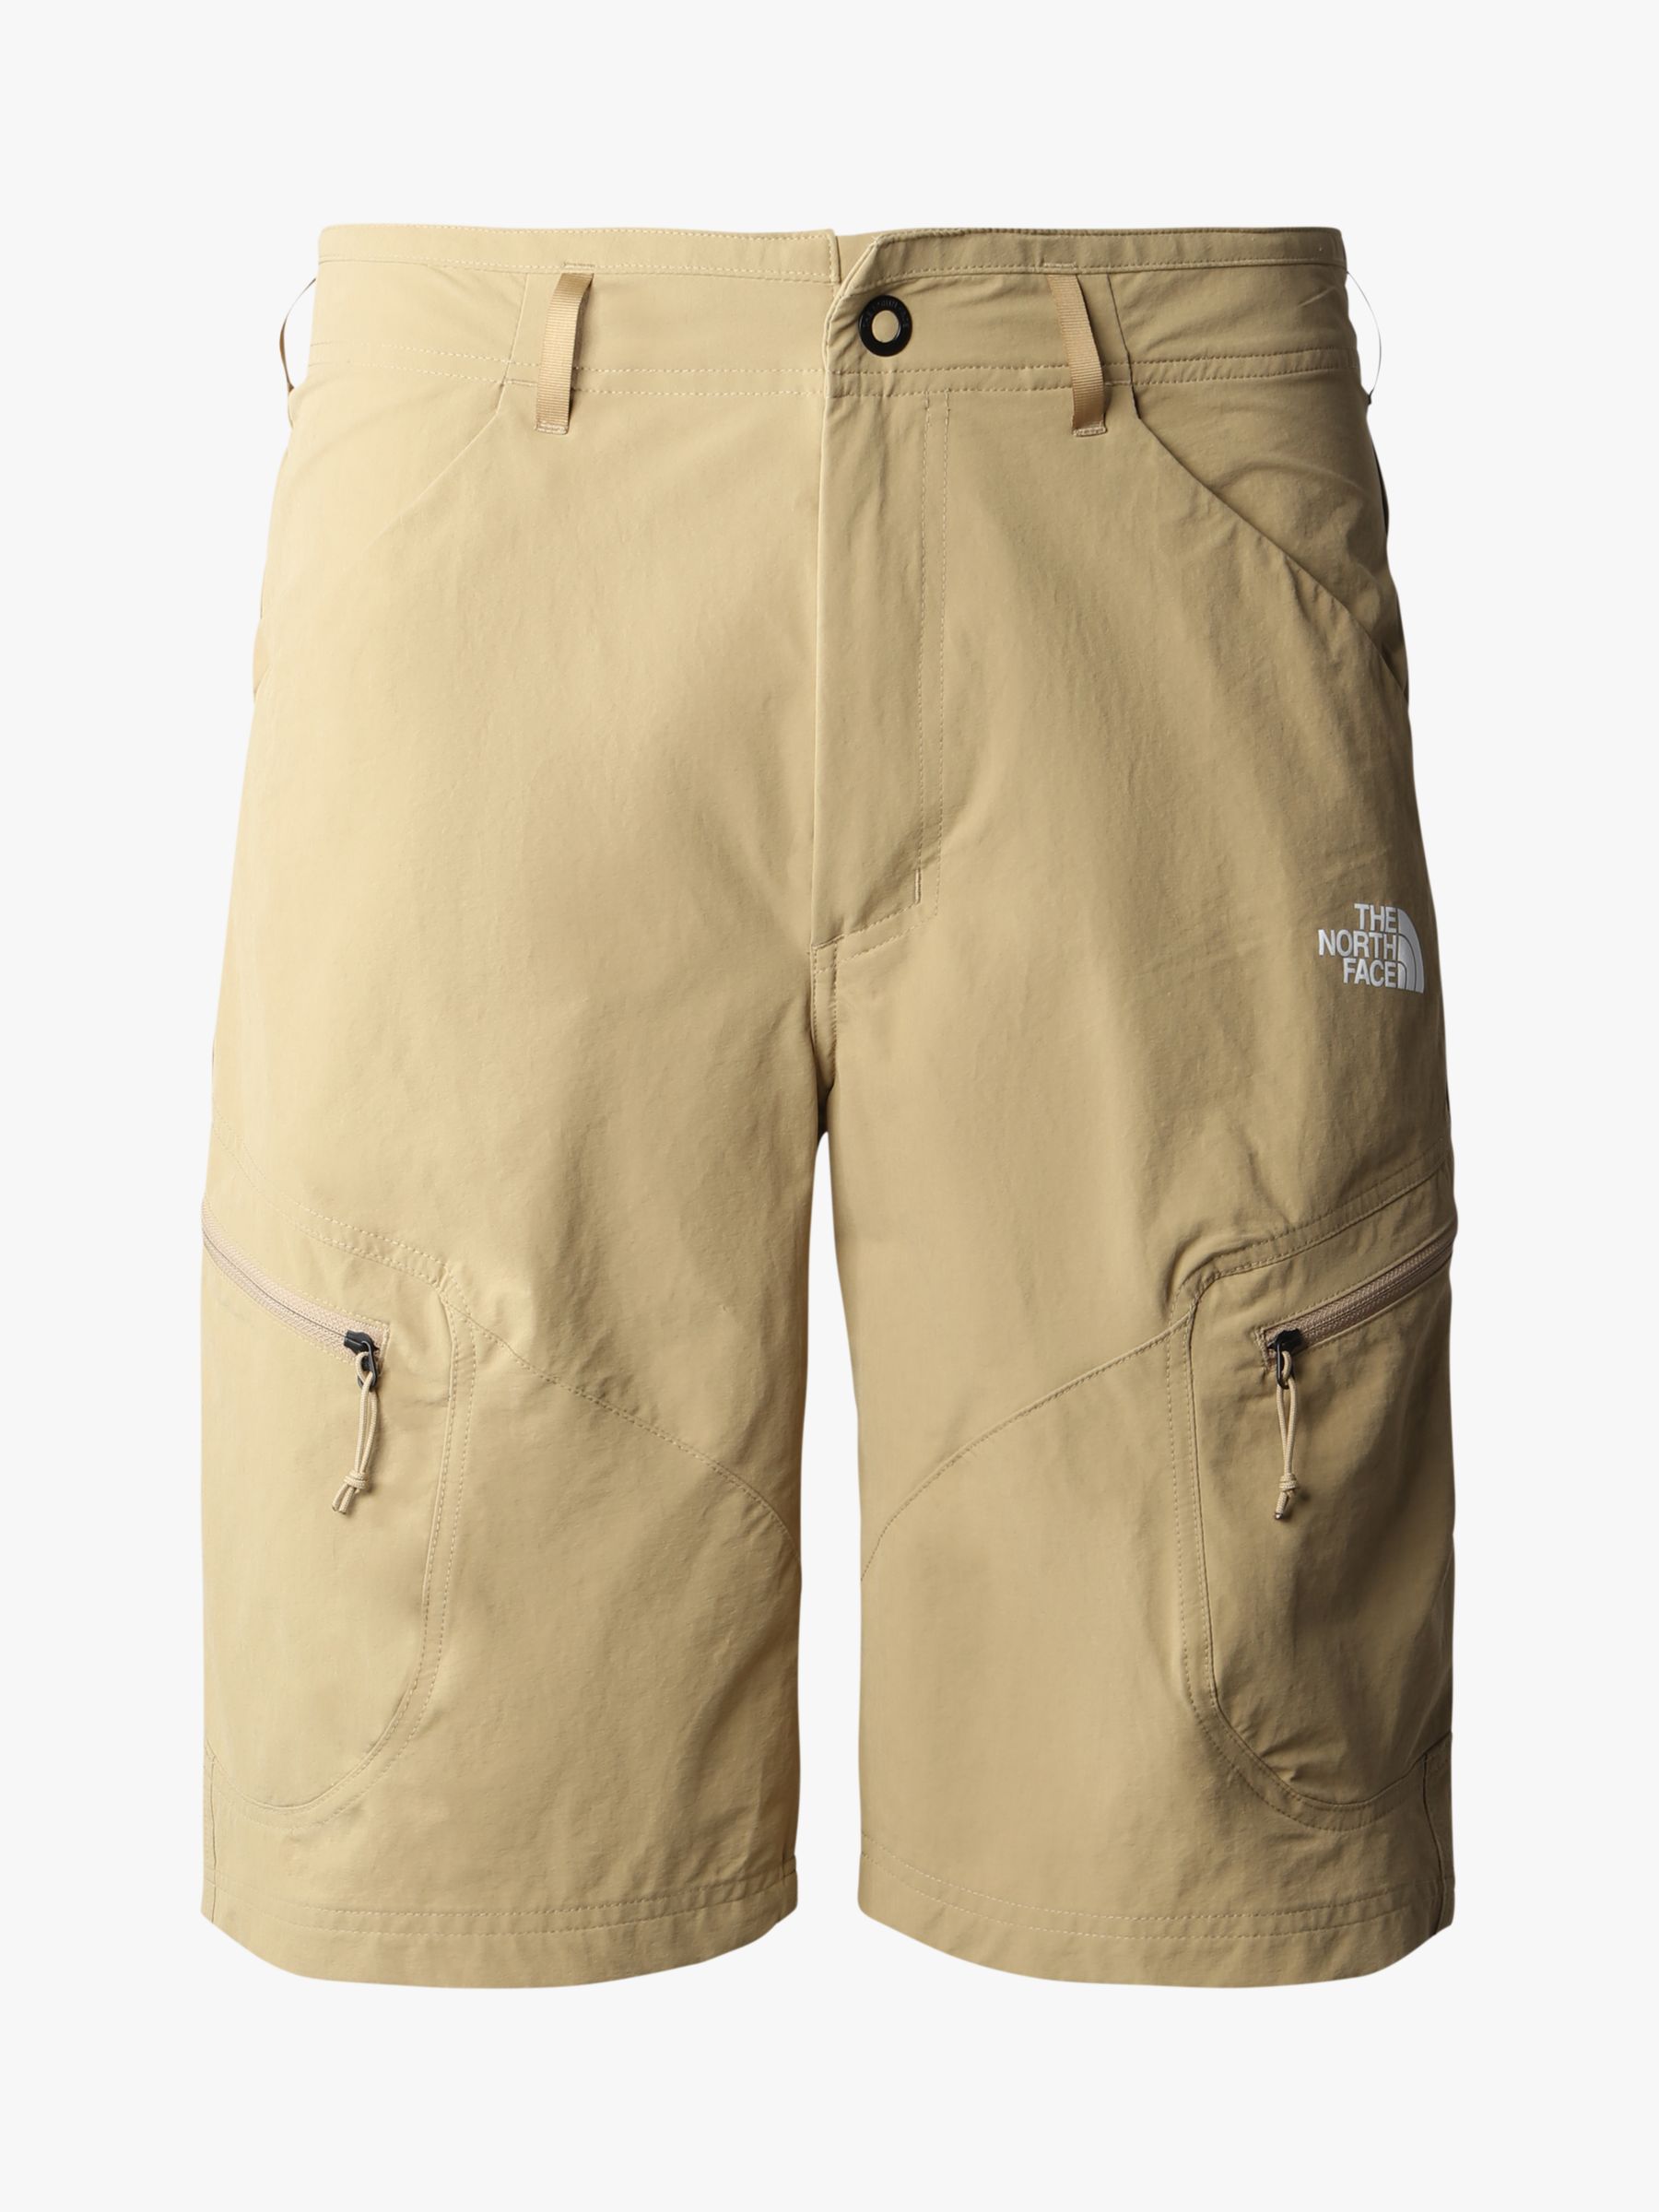 The North Face Exploration Shorts, Kelp Tan, 32